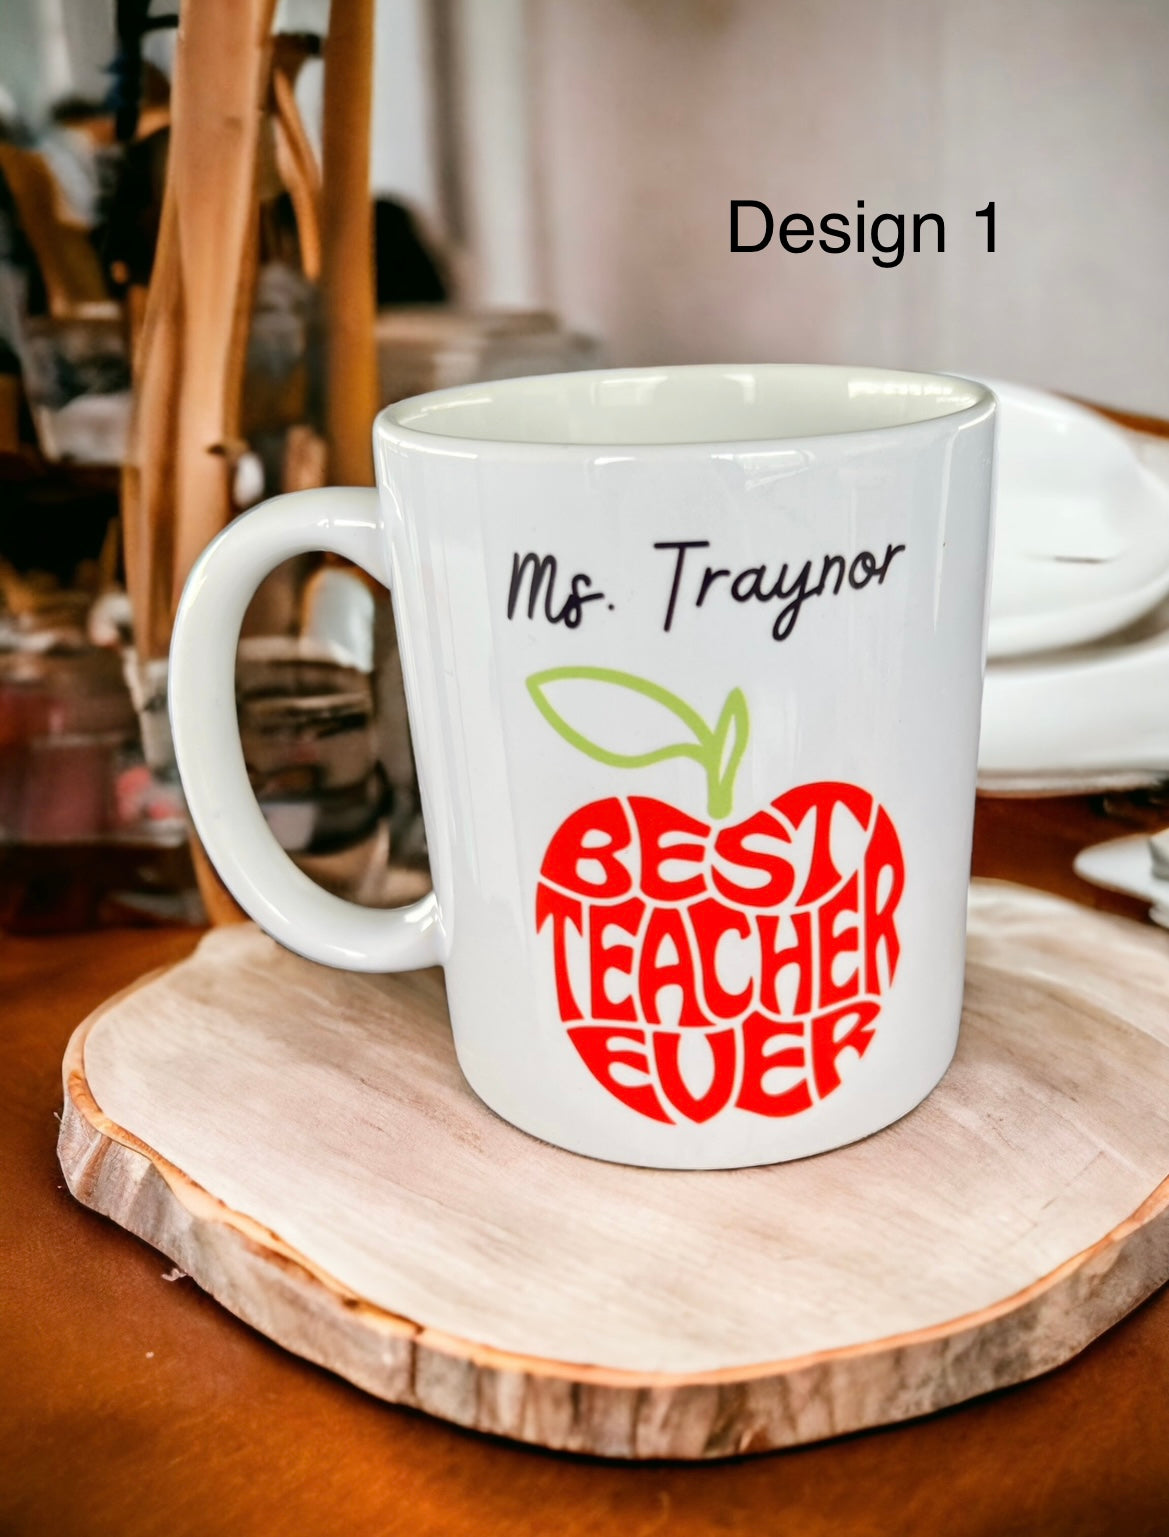 Teachers cake in a mug set